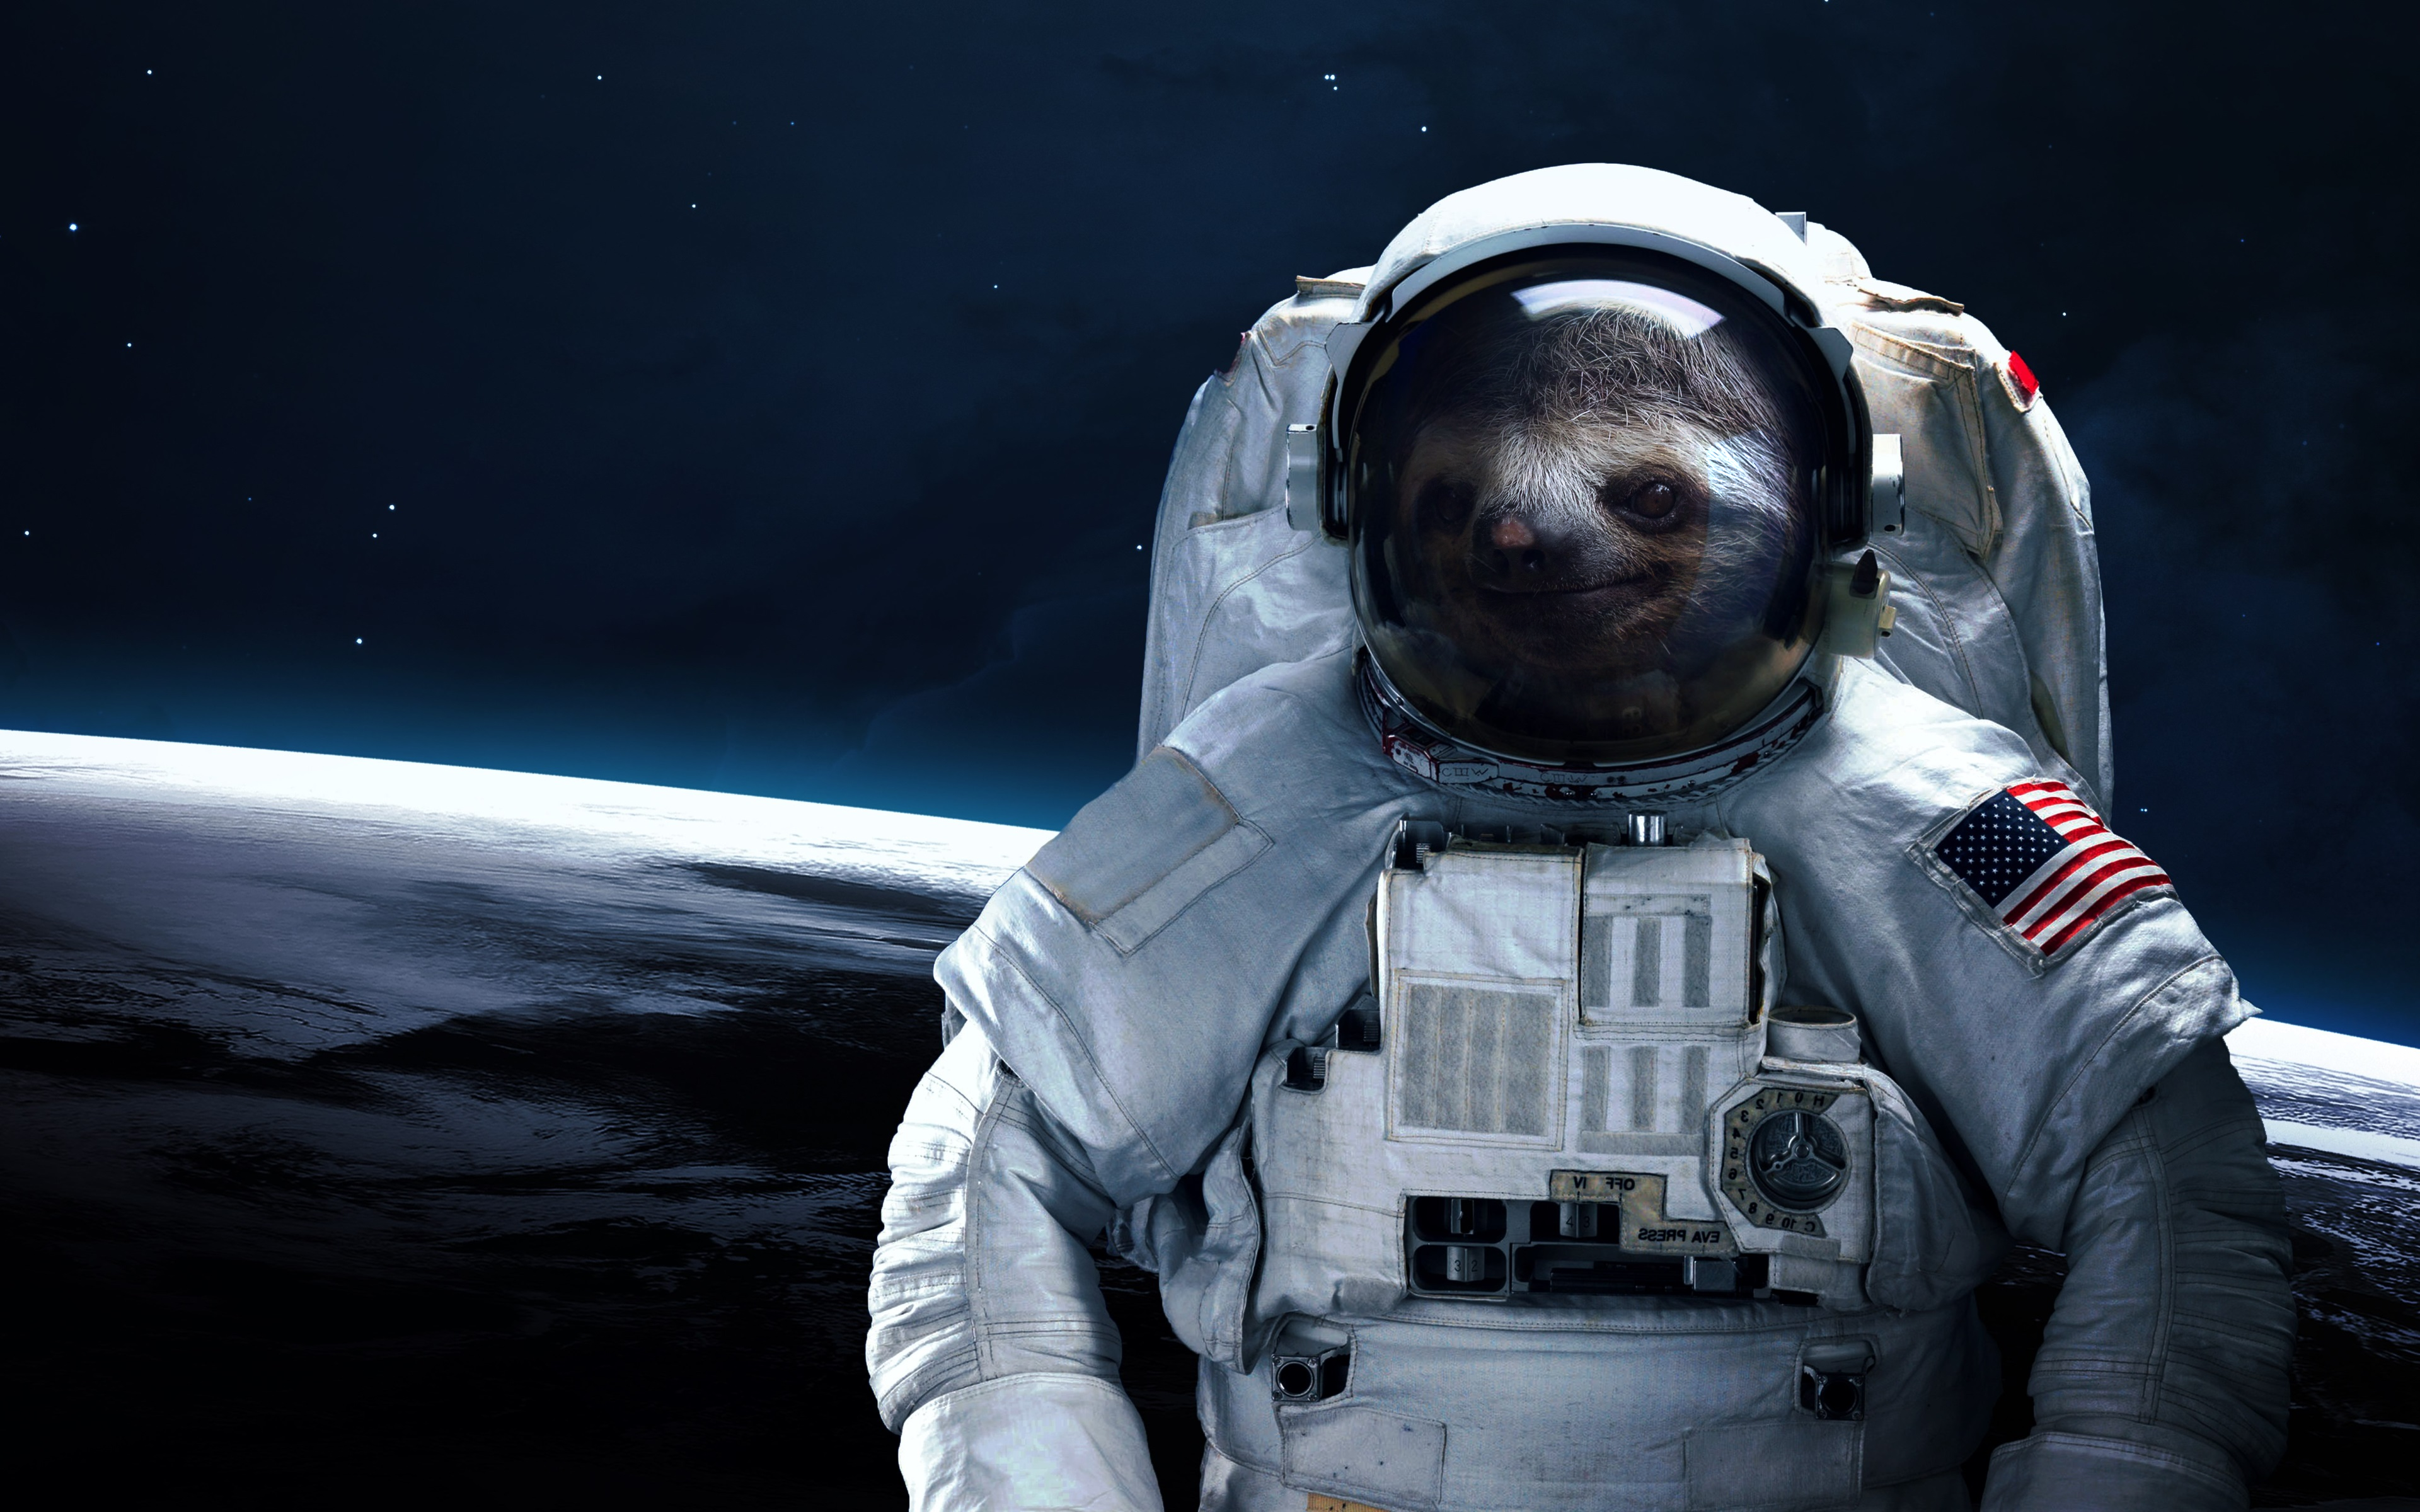 Sloth Astronaut [3840x2160], wallpaperreddit.com